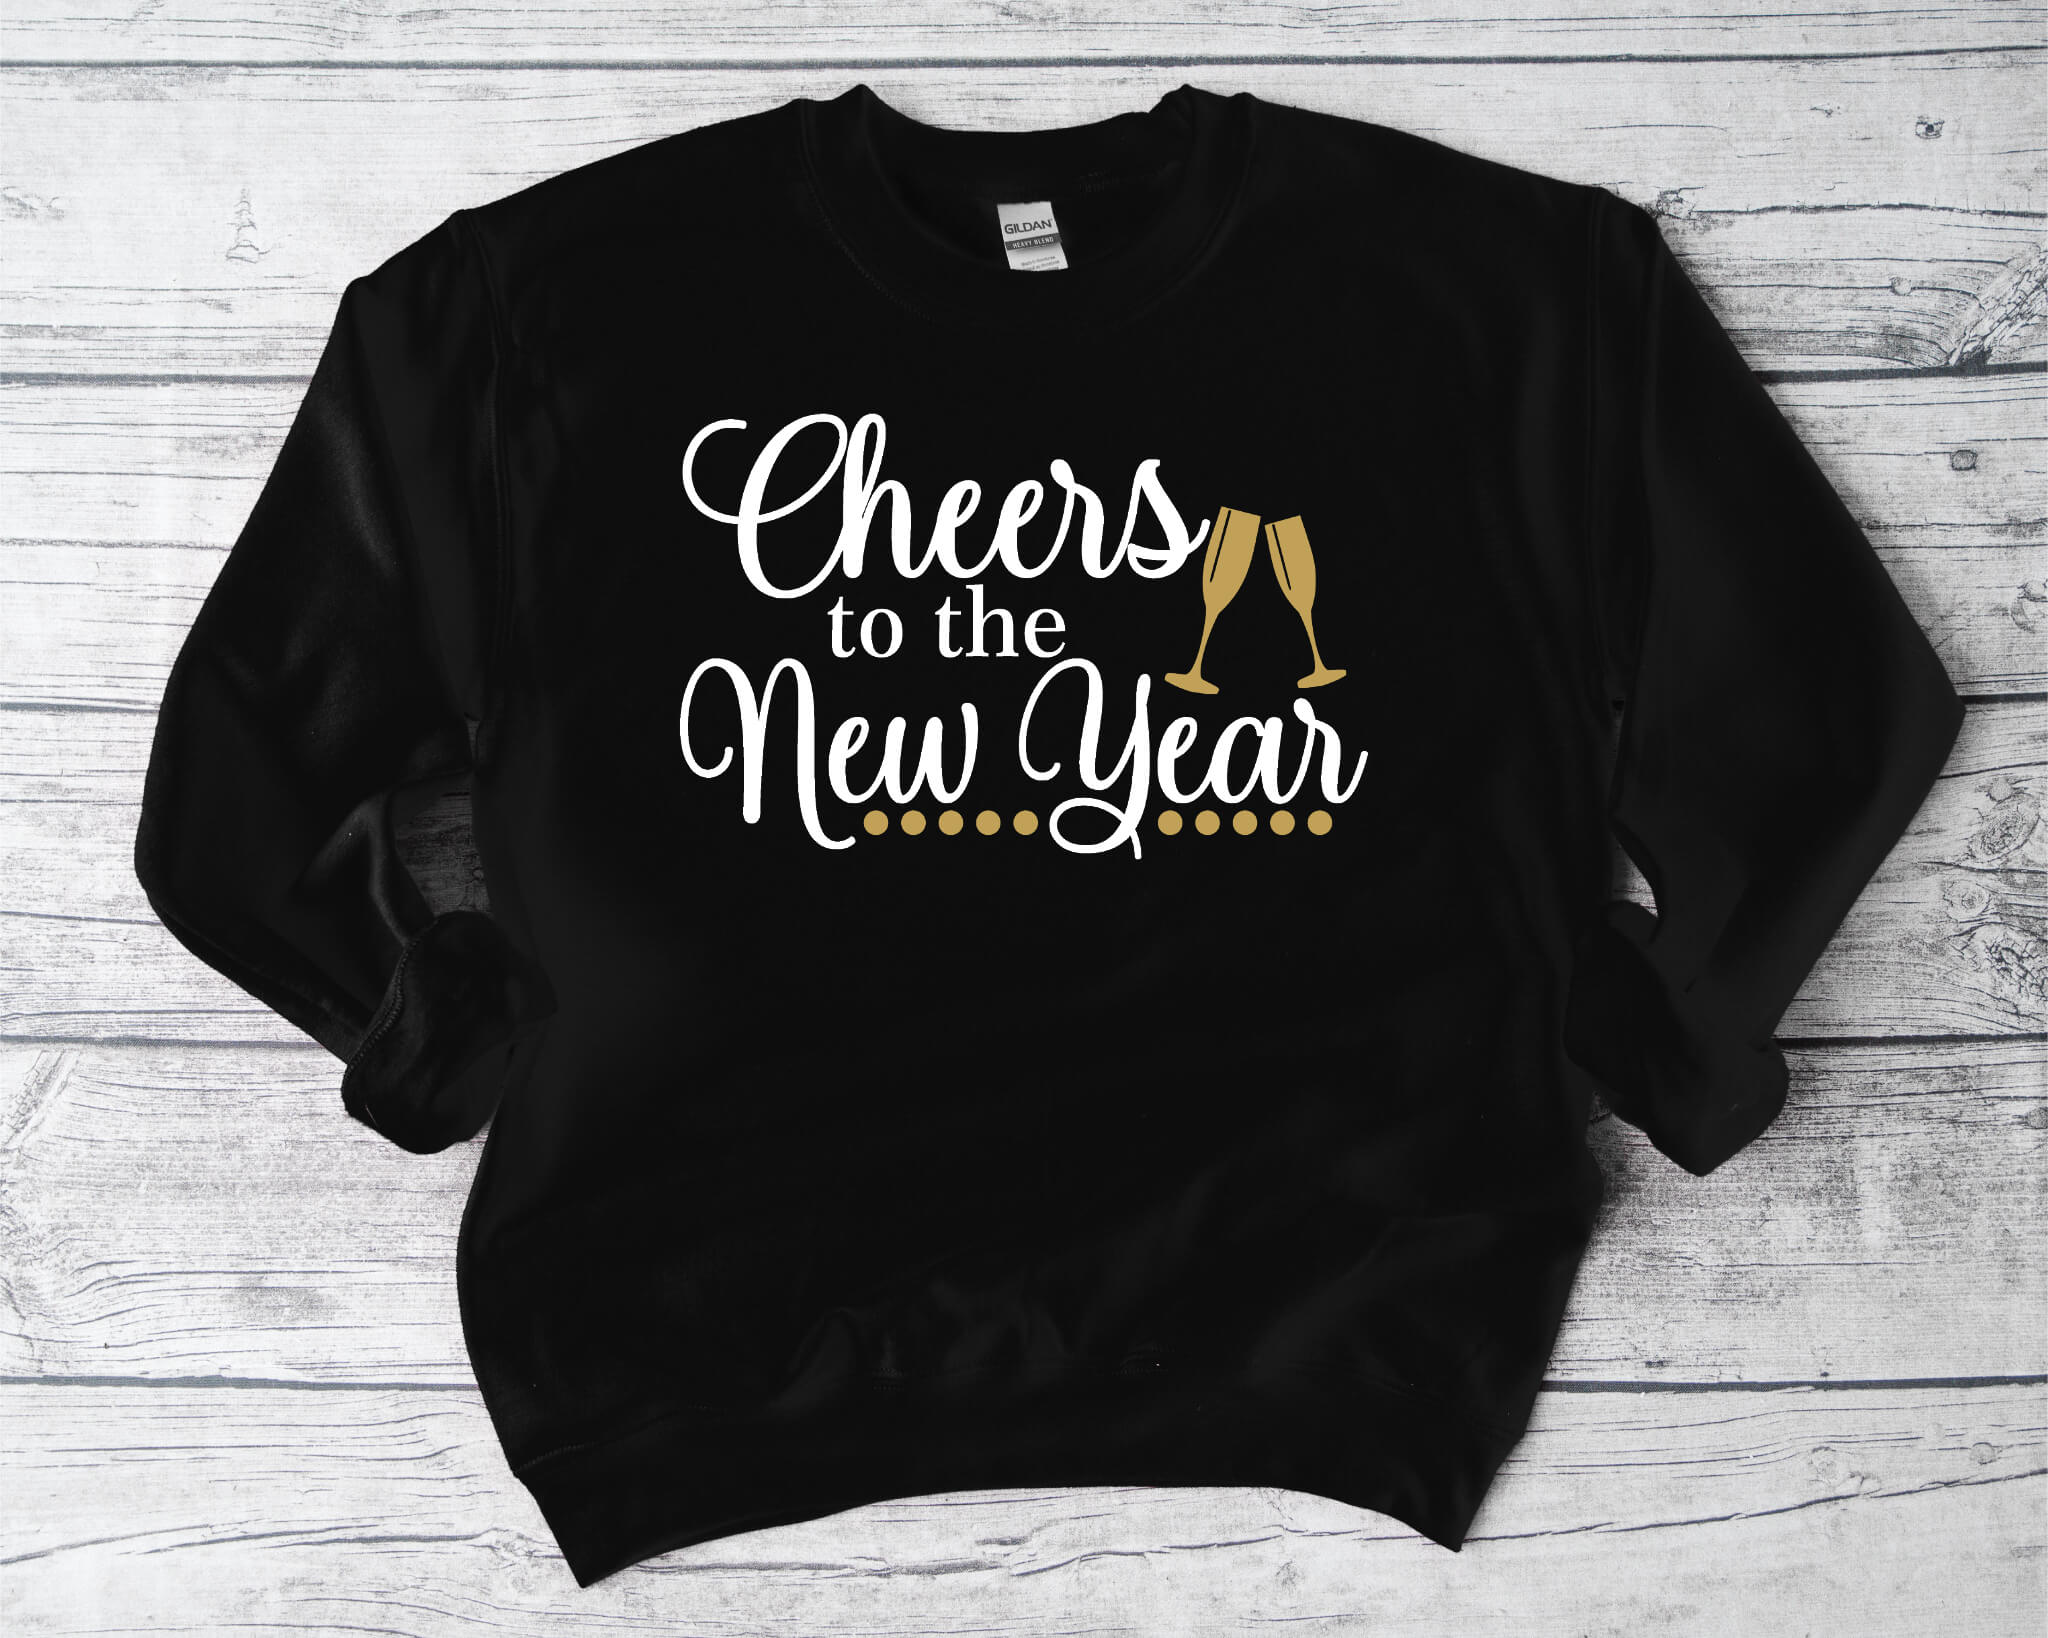 New Year's Cheers to the New Year Unisex Men's Women's Graphic Print T-Shirt